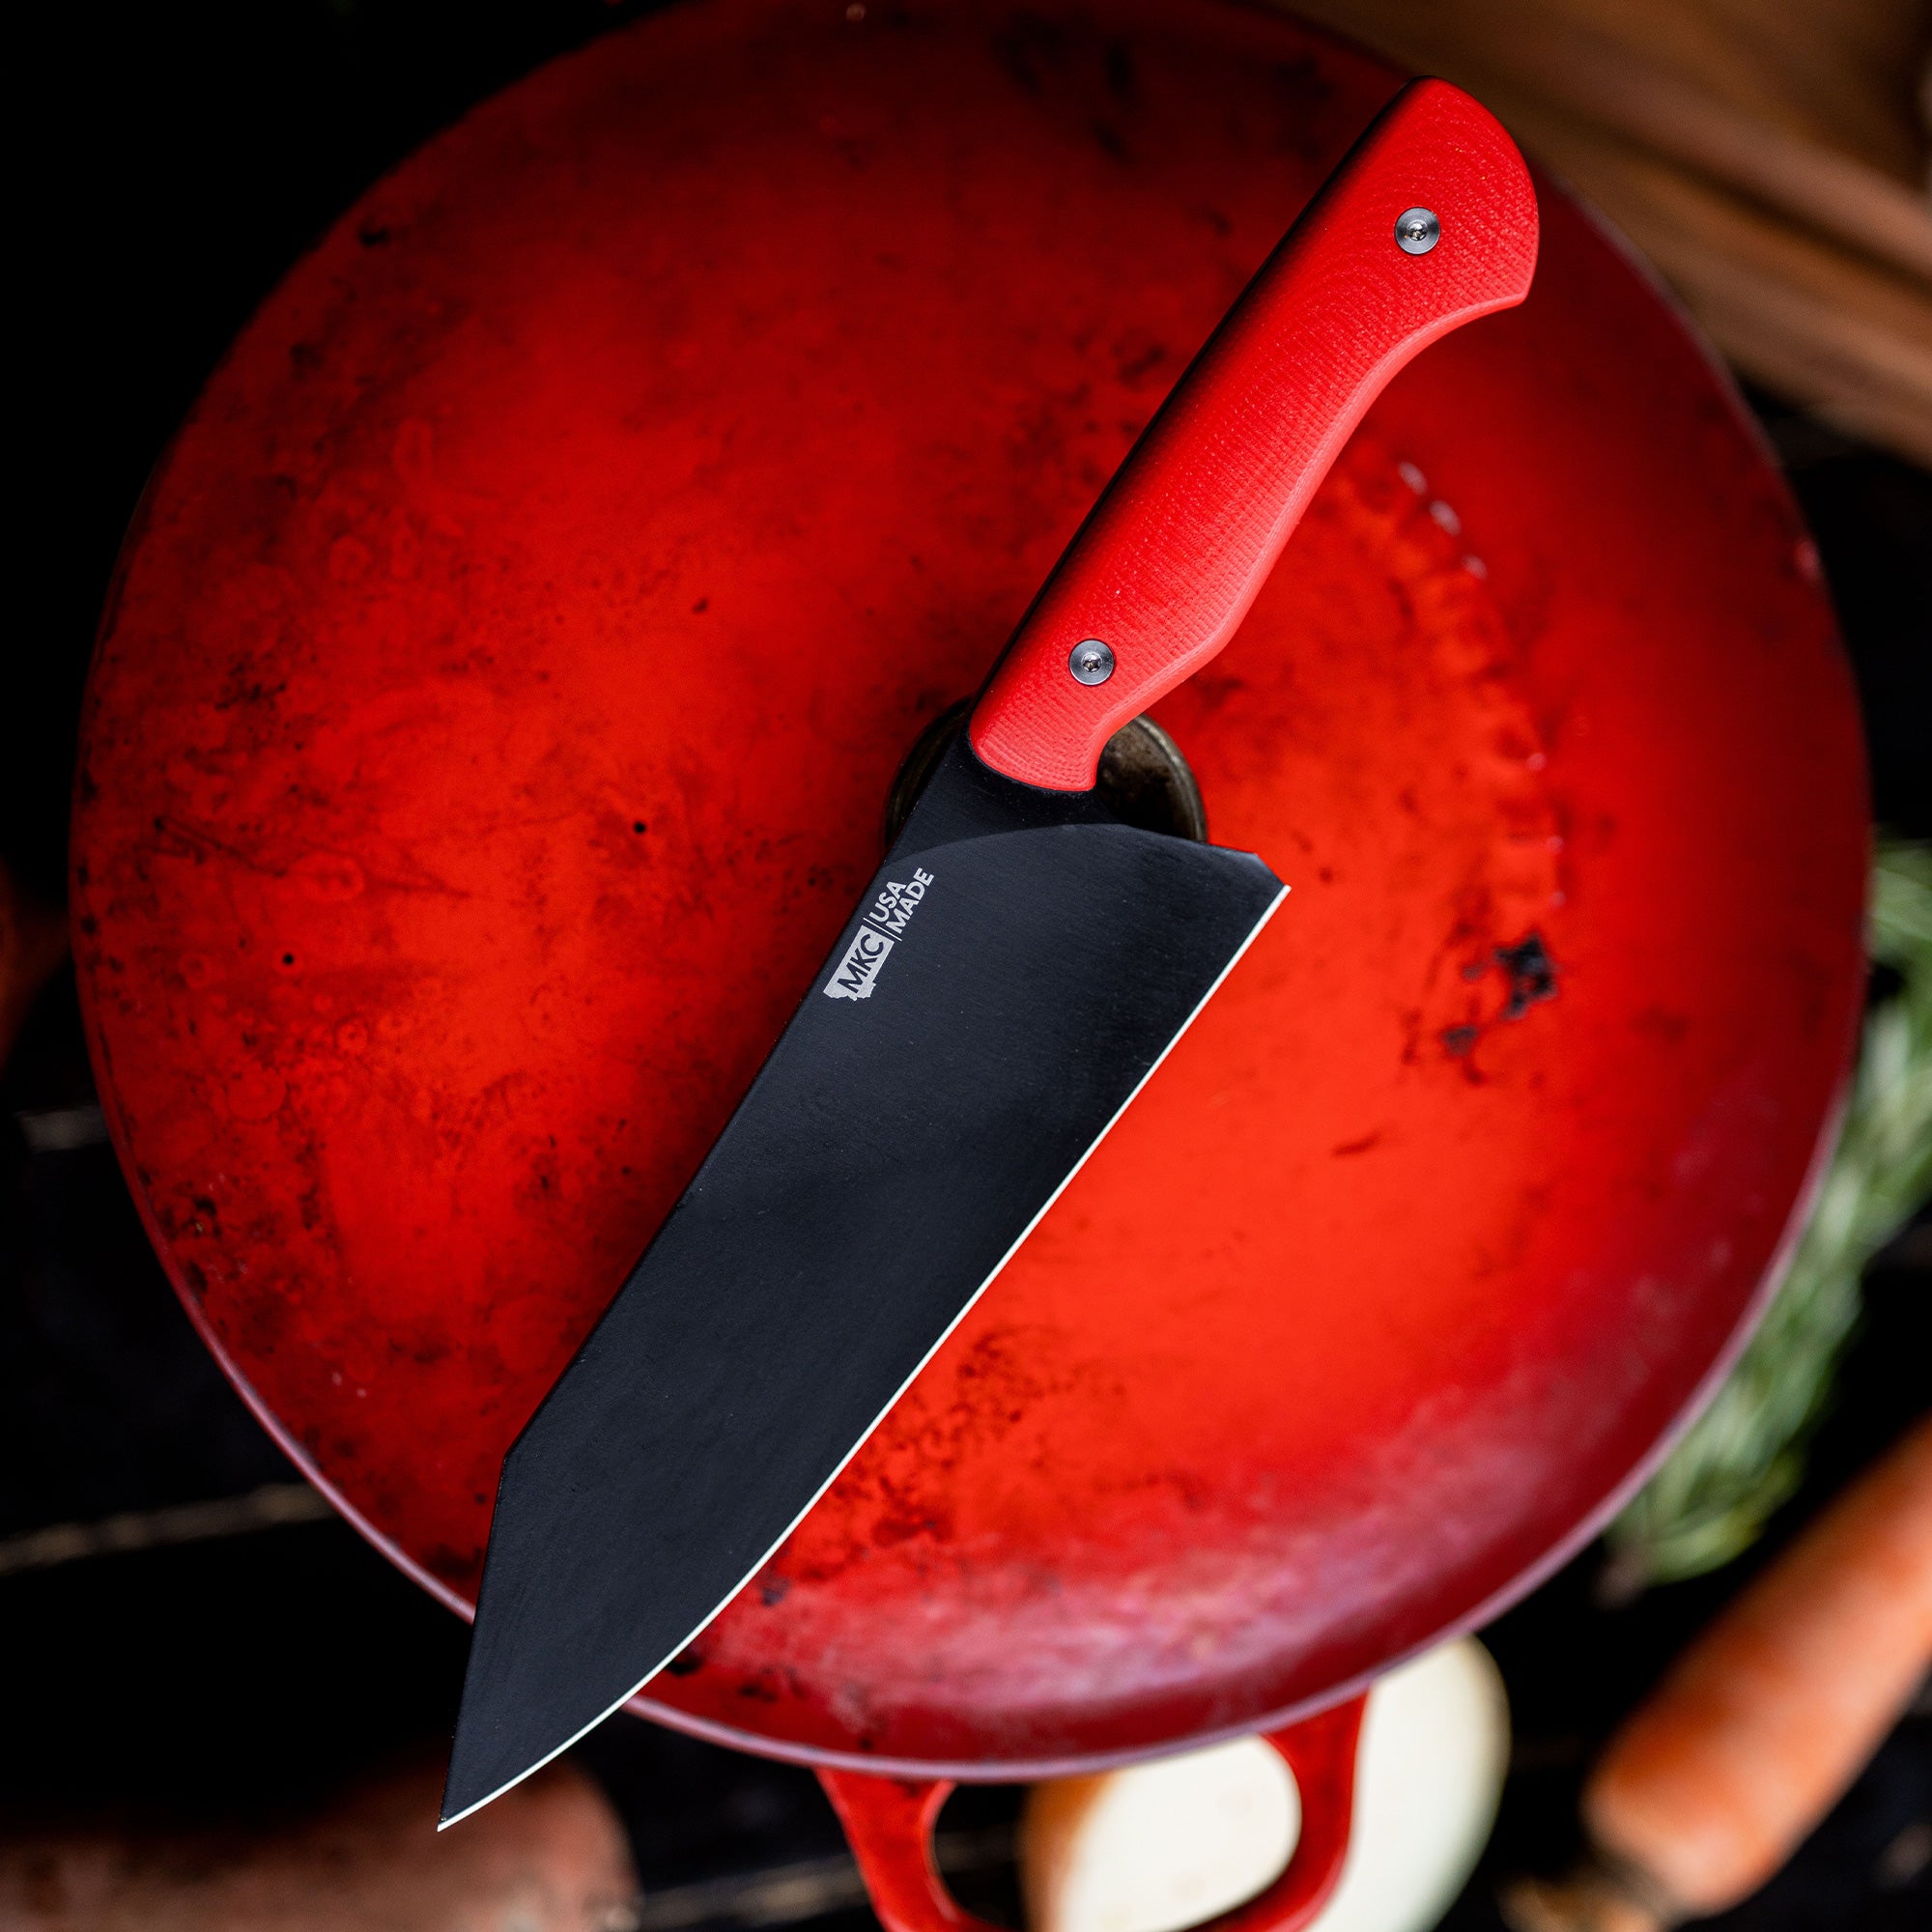 Tuo Cutlery - TC0704 - Santoku Knife - Asian Granton Chef Knife